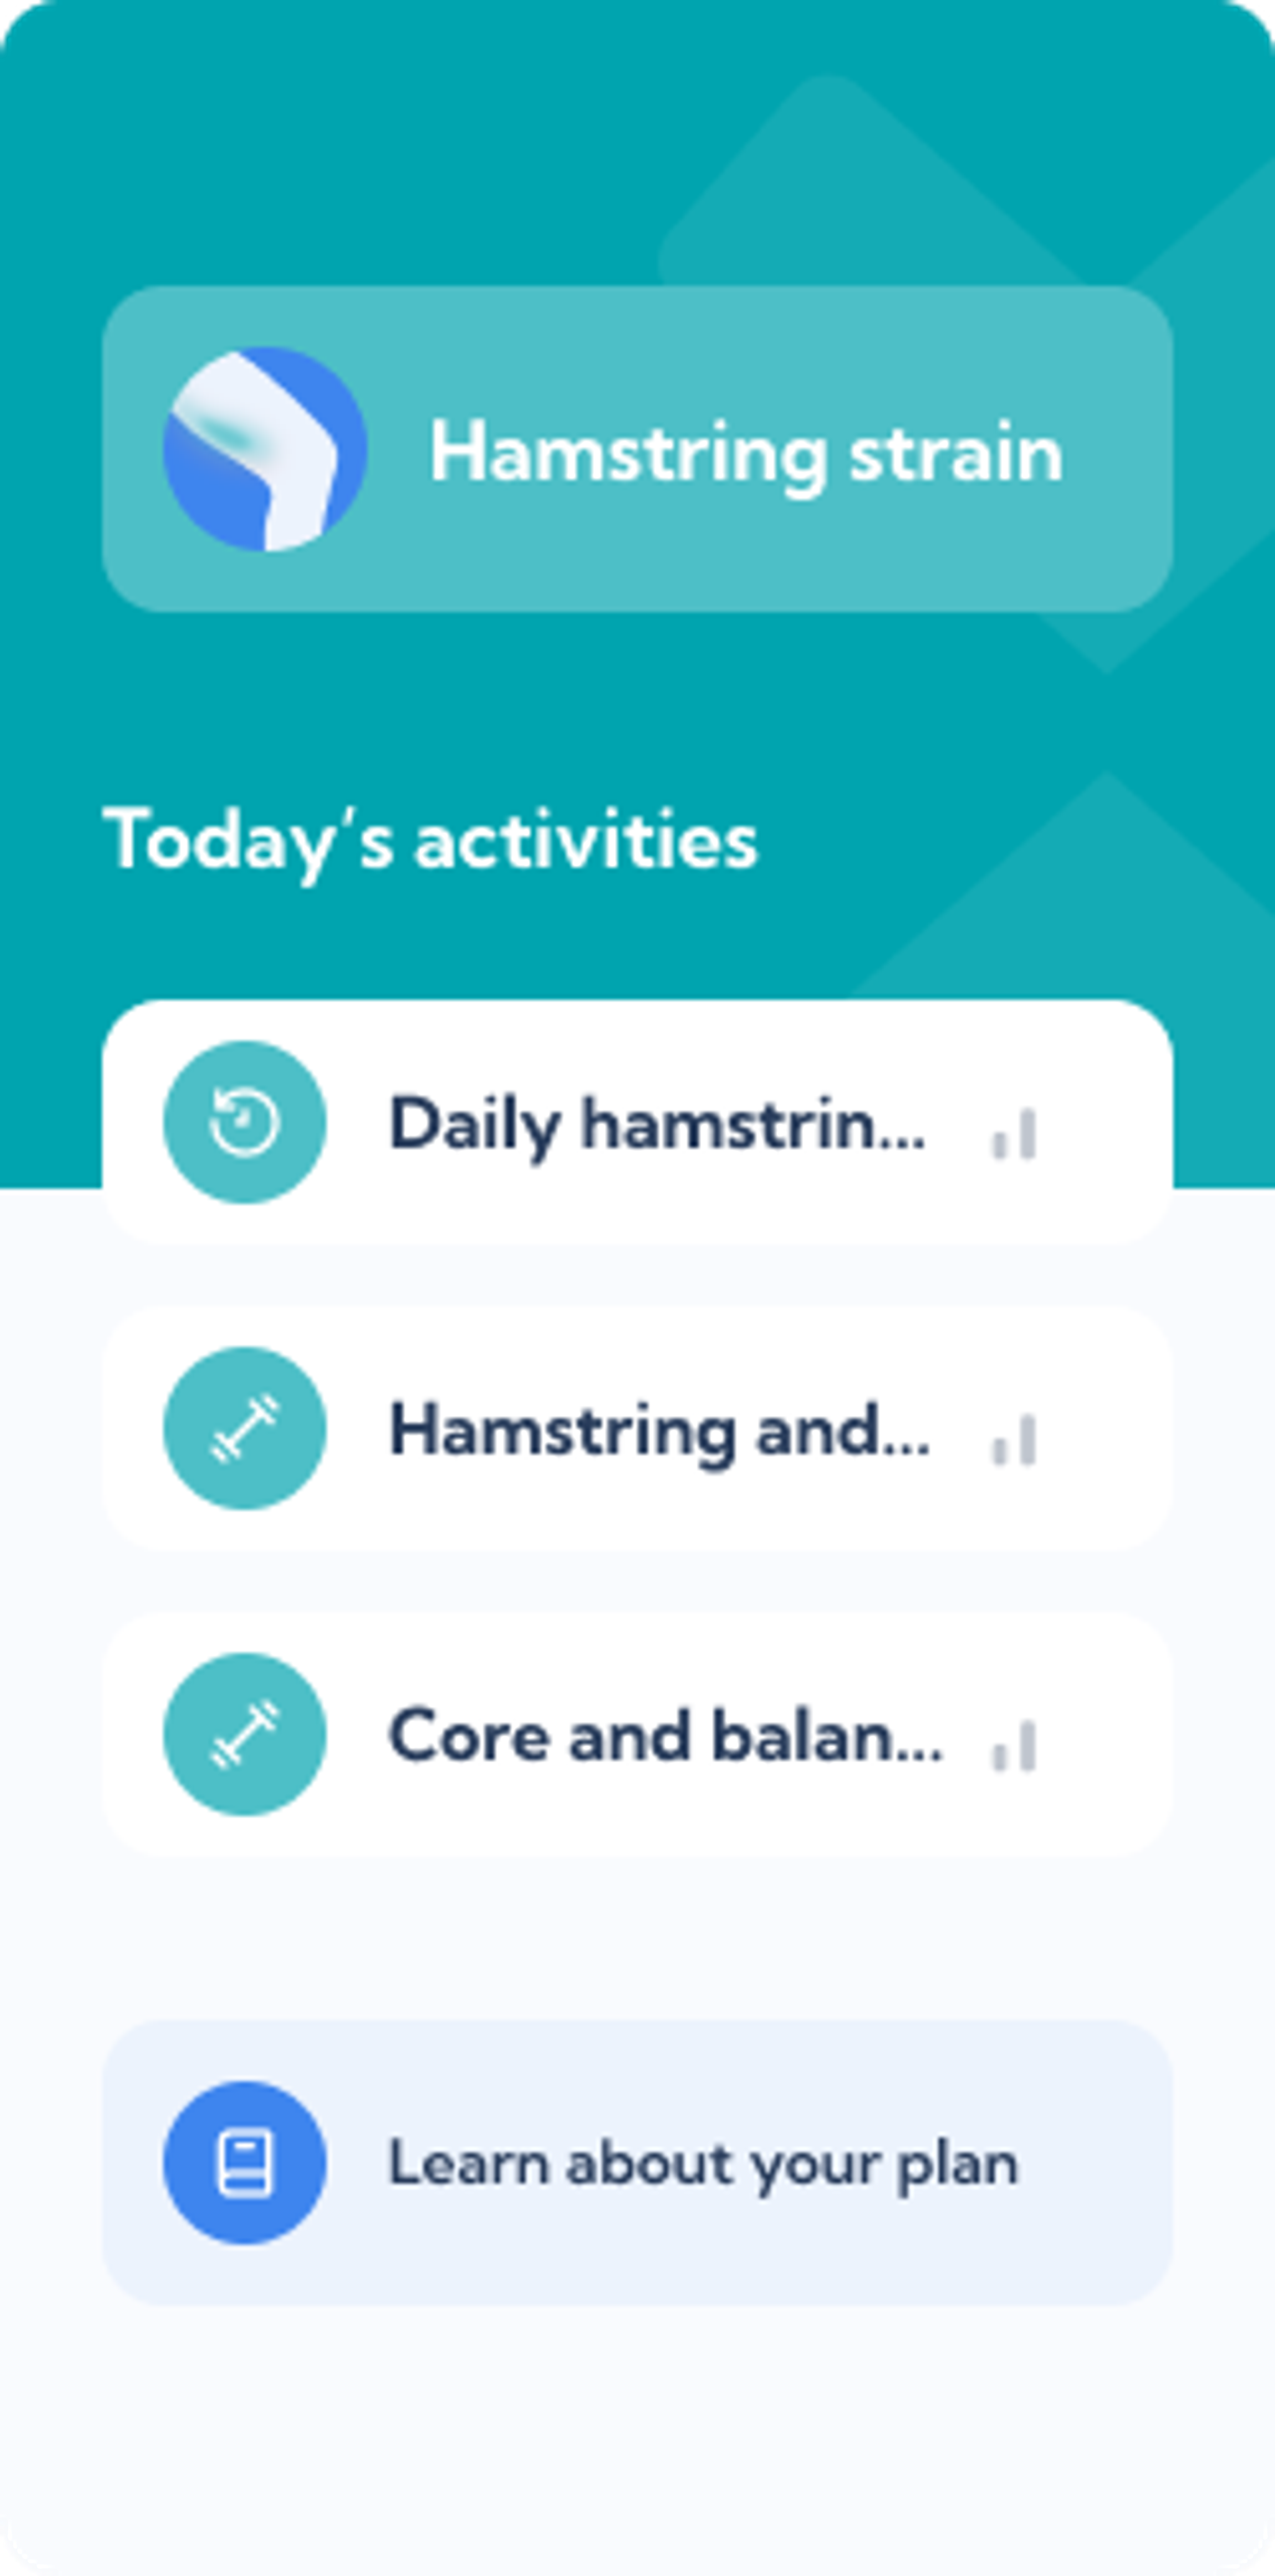 Hamstring strain rehab plan – Dashboard overview of the Exakt Health app